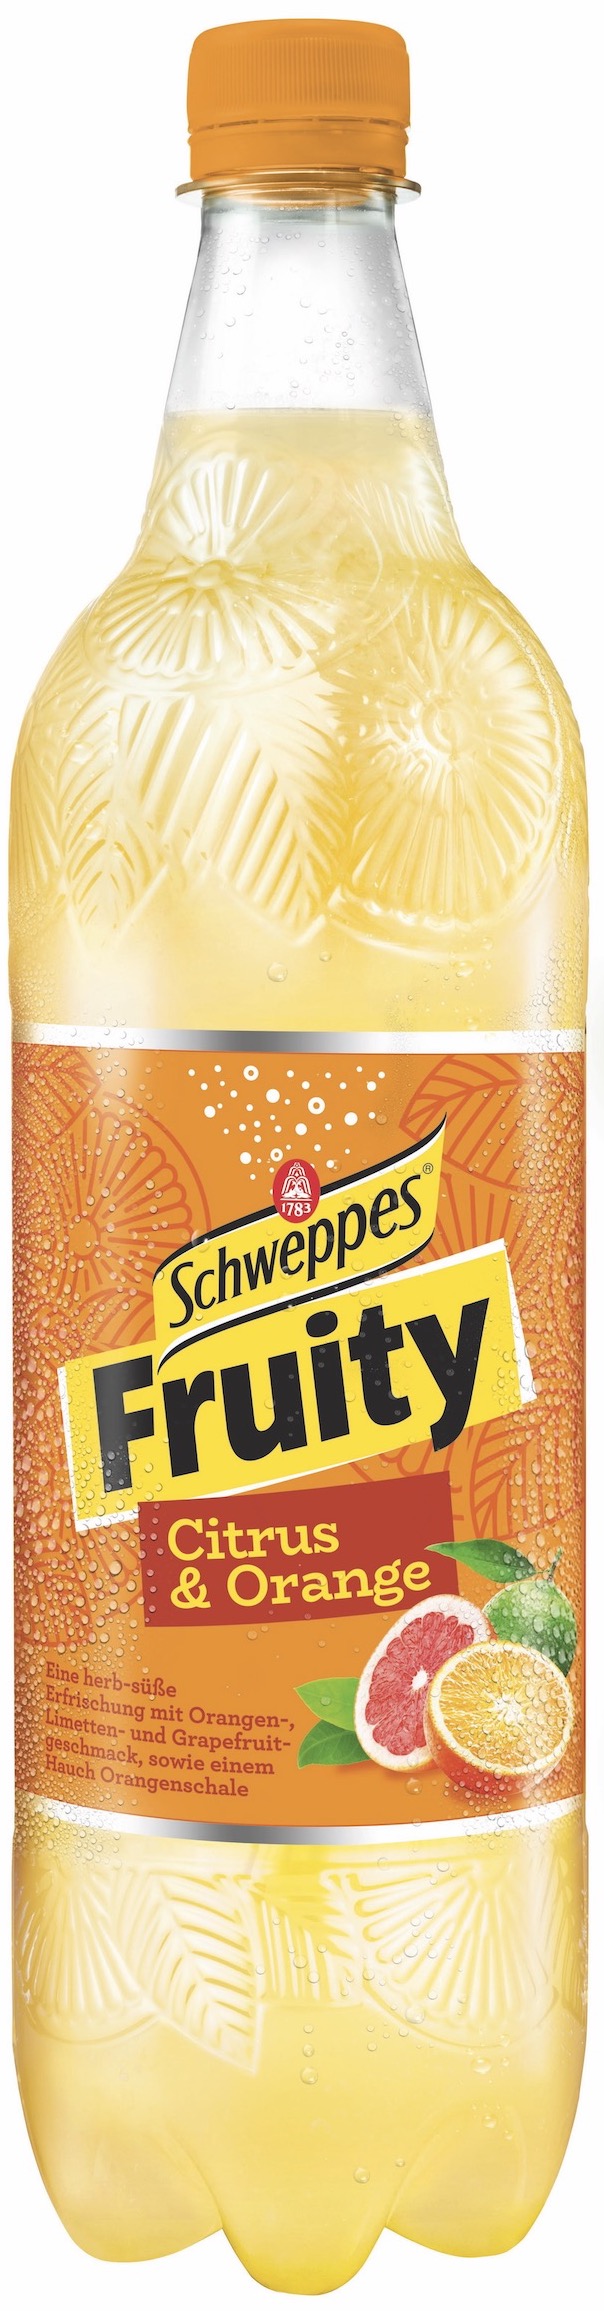 Schweppes Fruity Citrus & Orange 1,0L EINWEG